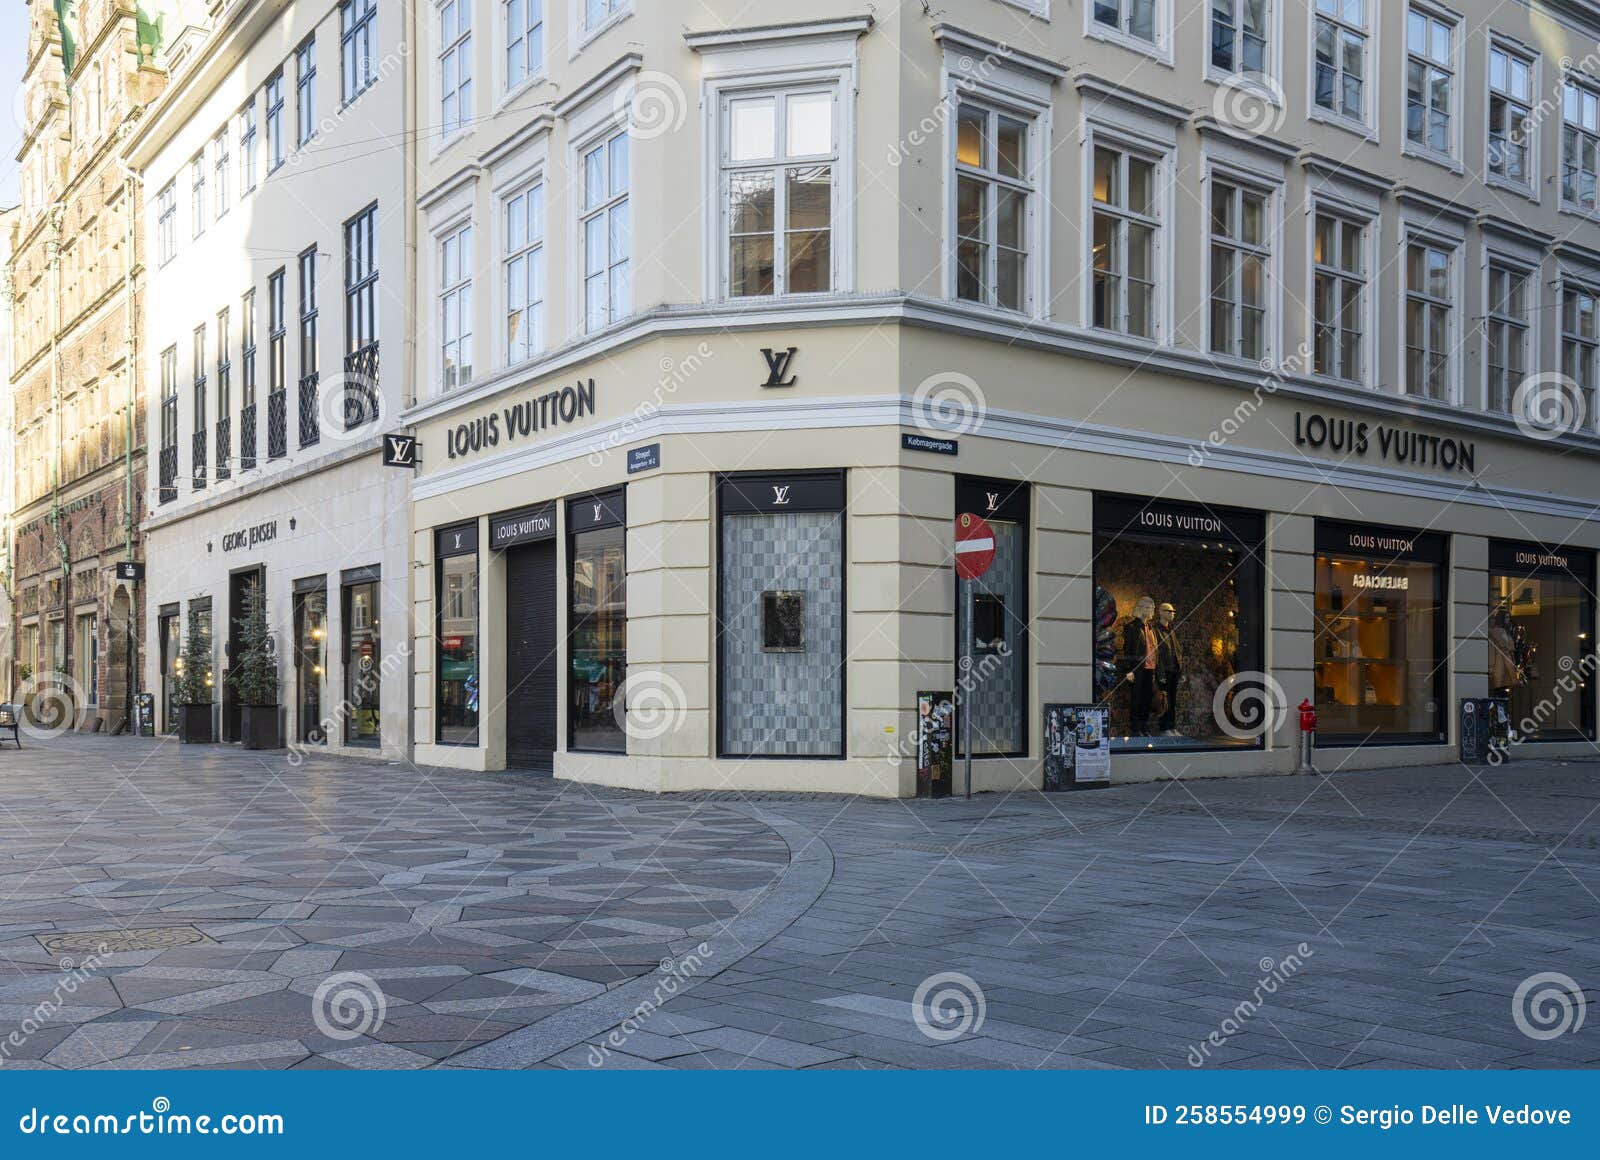 Louis Vuitton Brand Shop in Copenhagen, Denmark Editorial Stock Image -  Image of handbags, clothing: 258554999